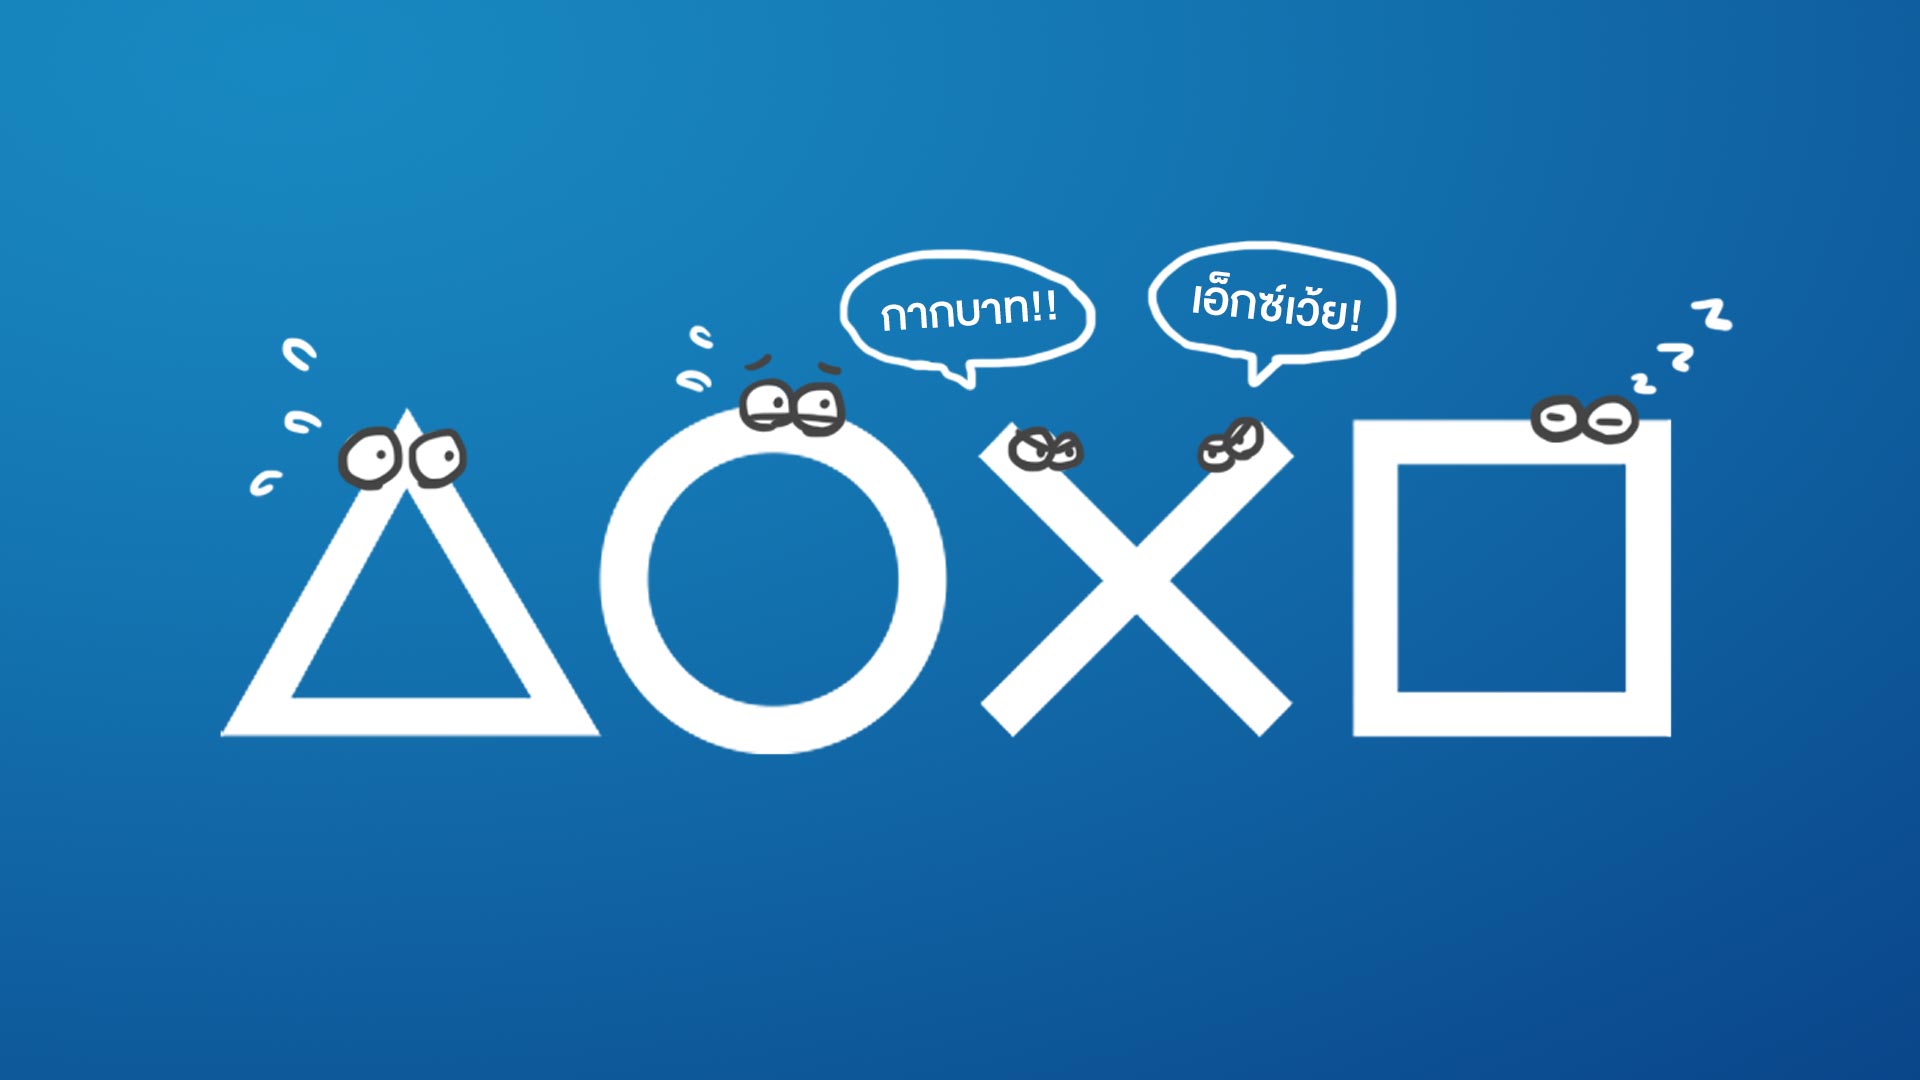 Playstation จะแจ้ง! ปุ่ม X อ่านว่า “Cross” (กากบาท) ไม่ใช่ “เอ็กซ์”